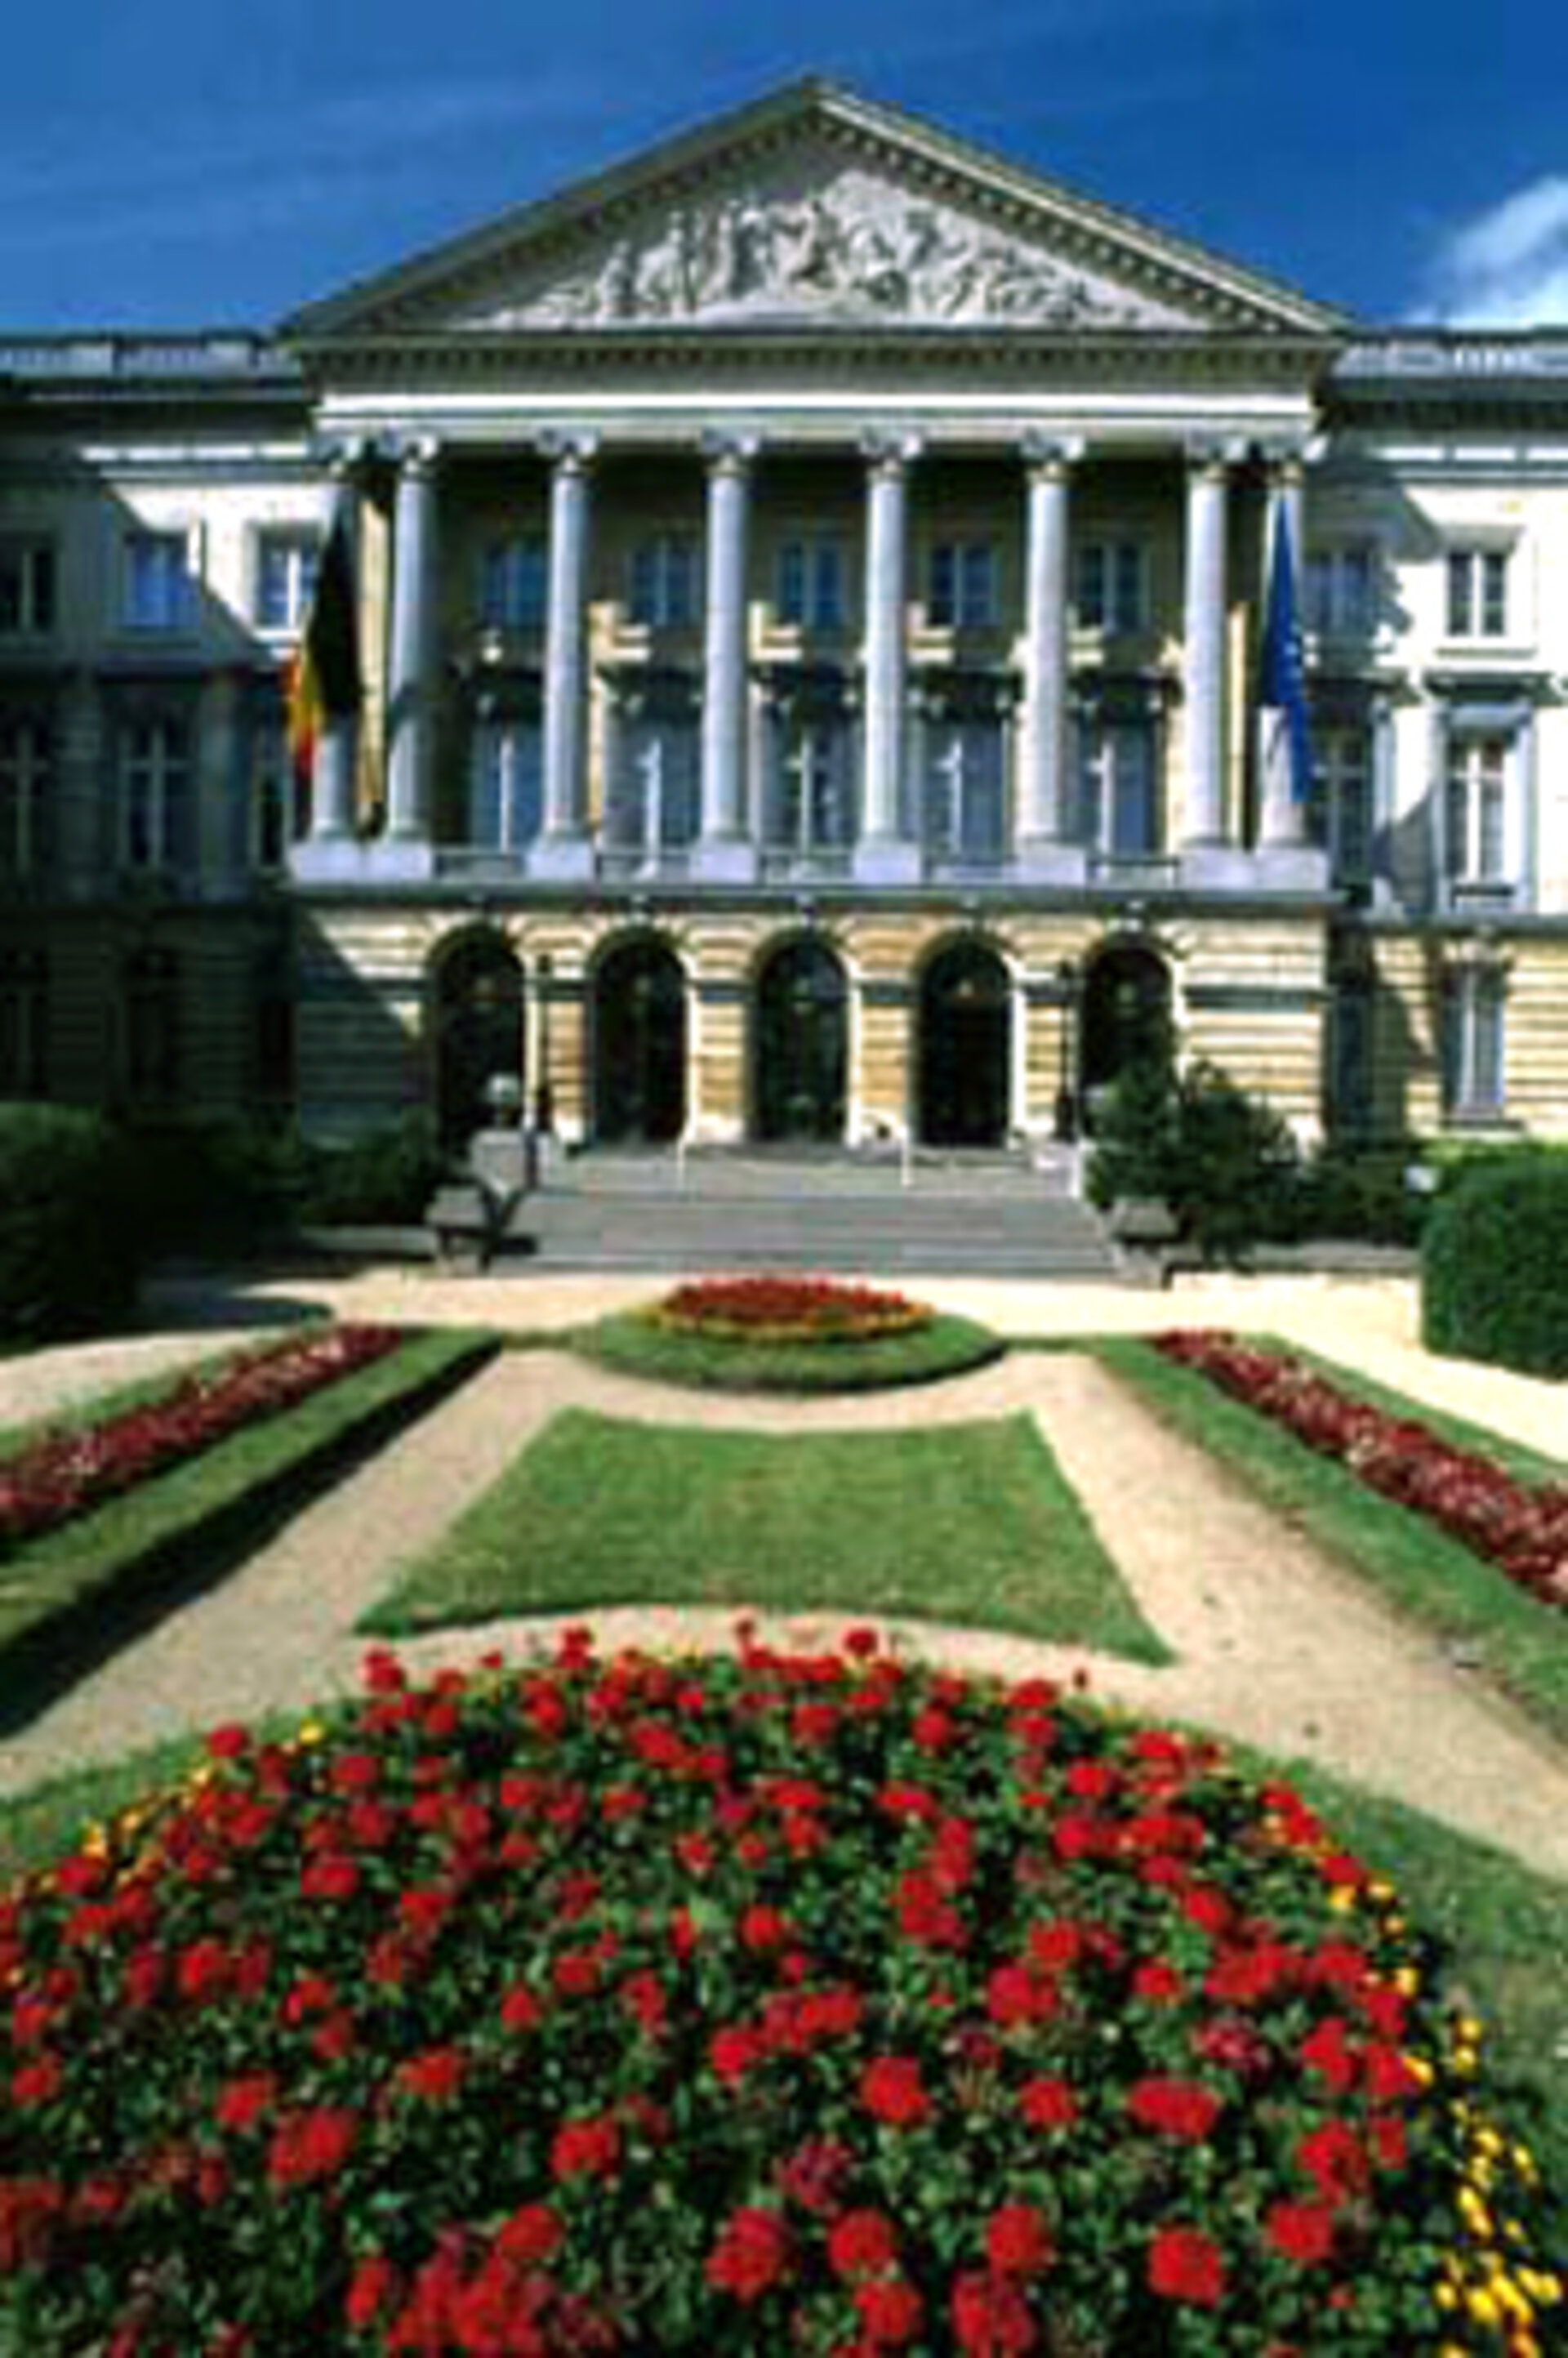 Le Parlement fédéral belge